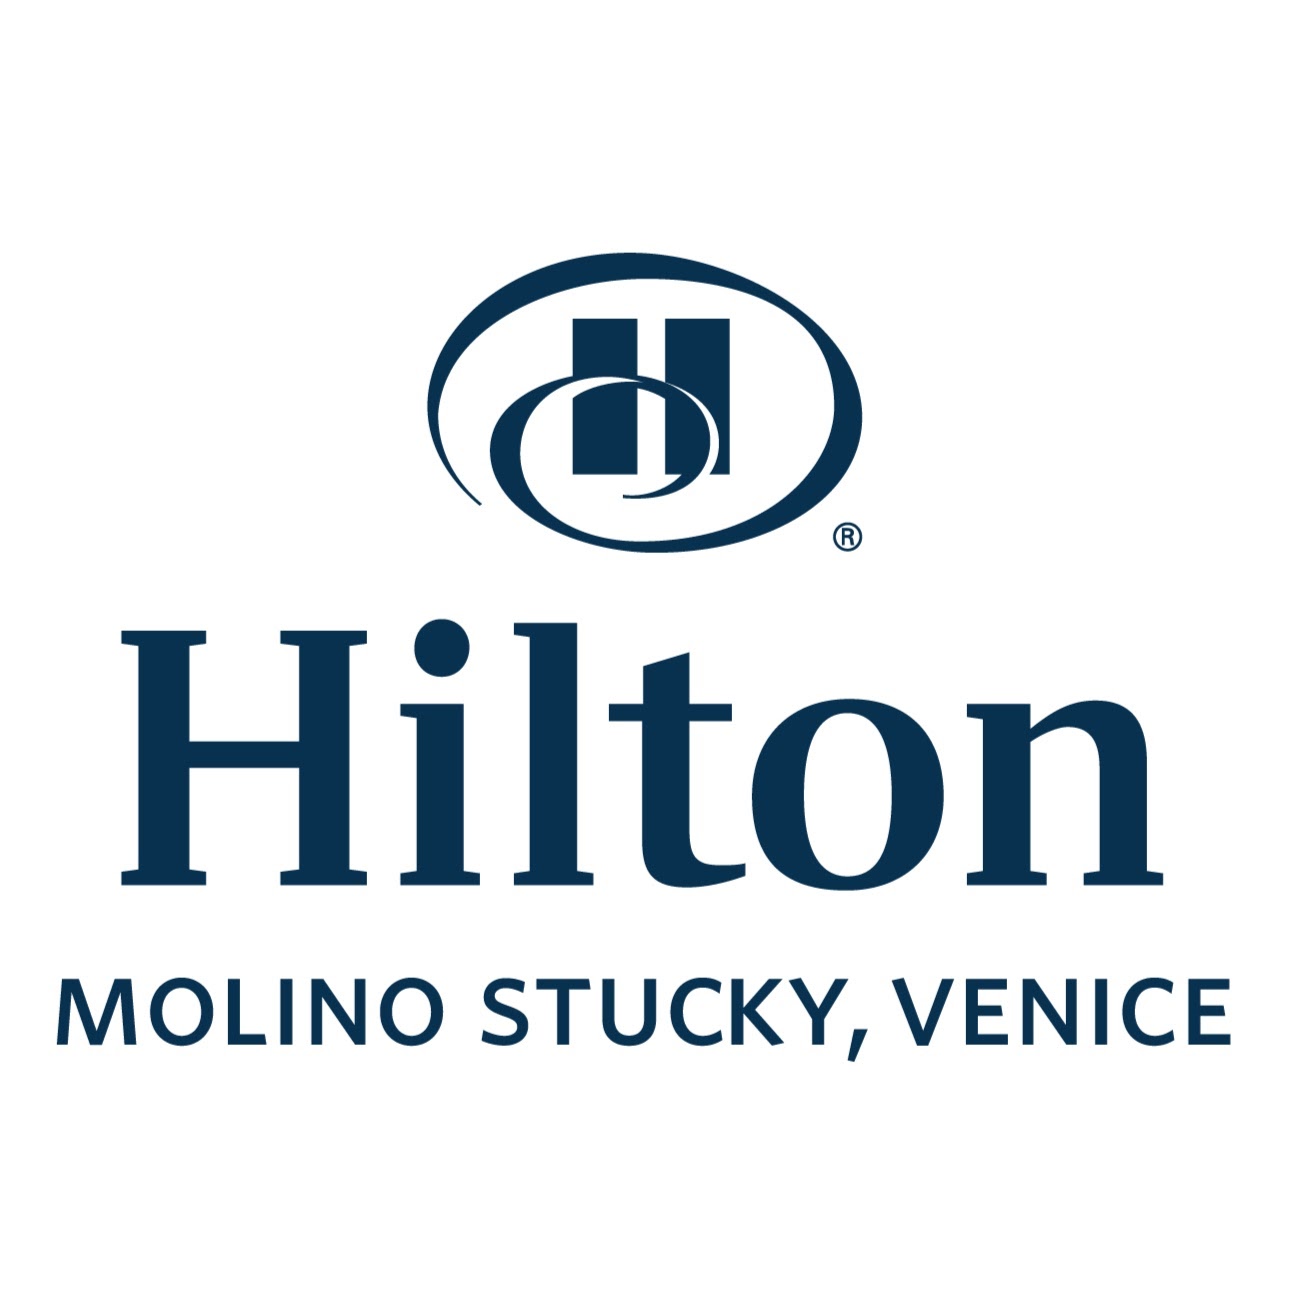 Hilton Molino Stucky Venice